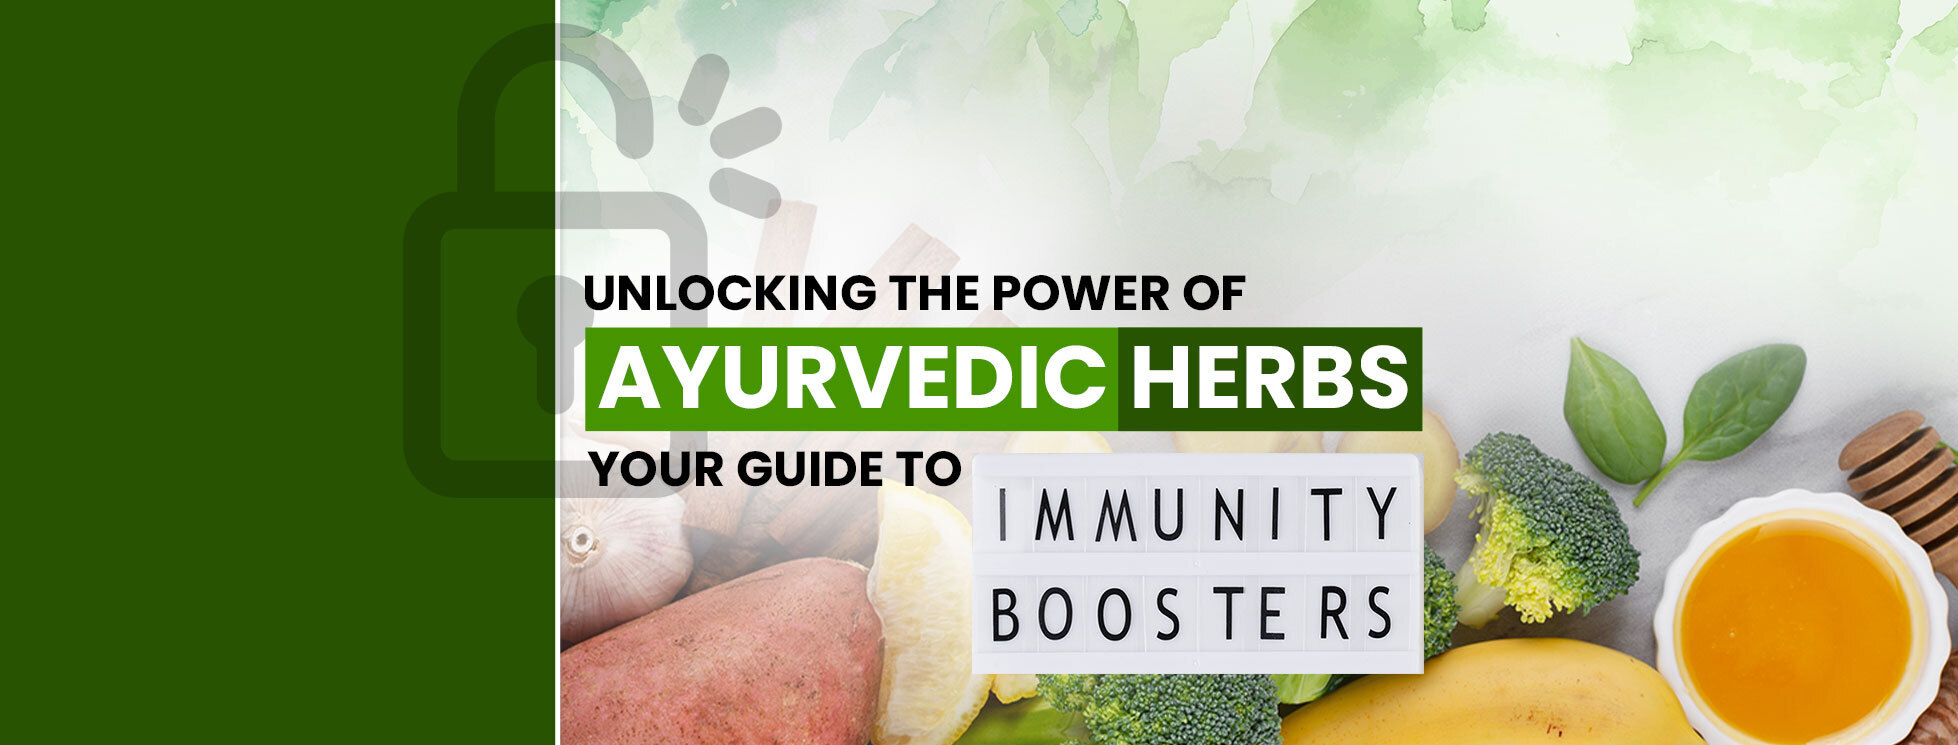 Ayurvedic herbs for immune system